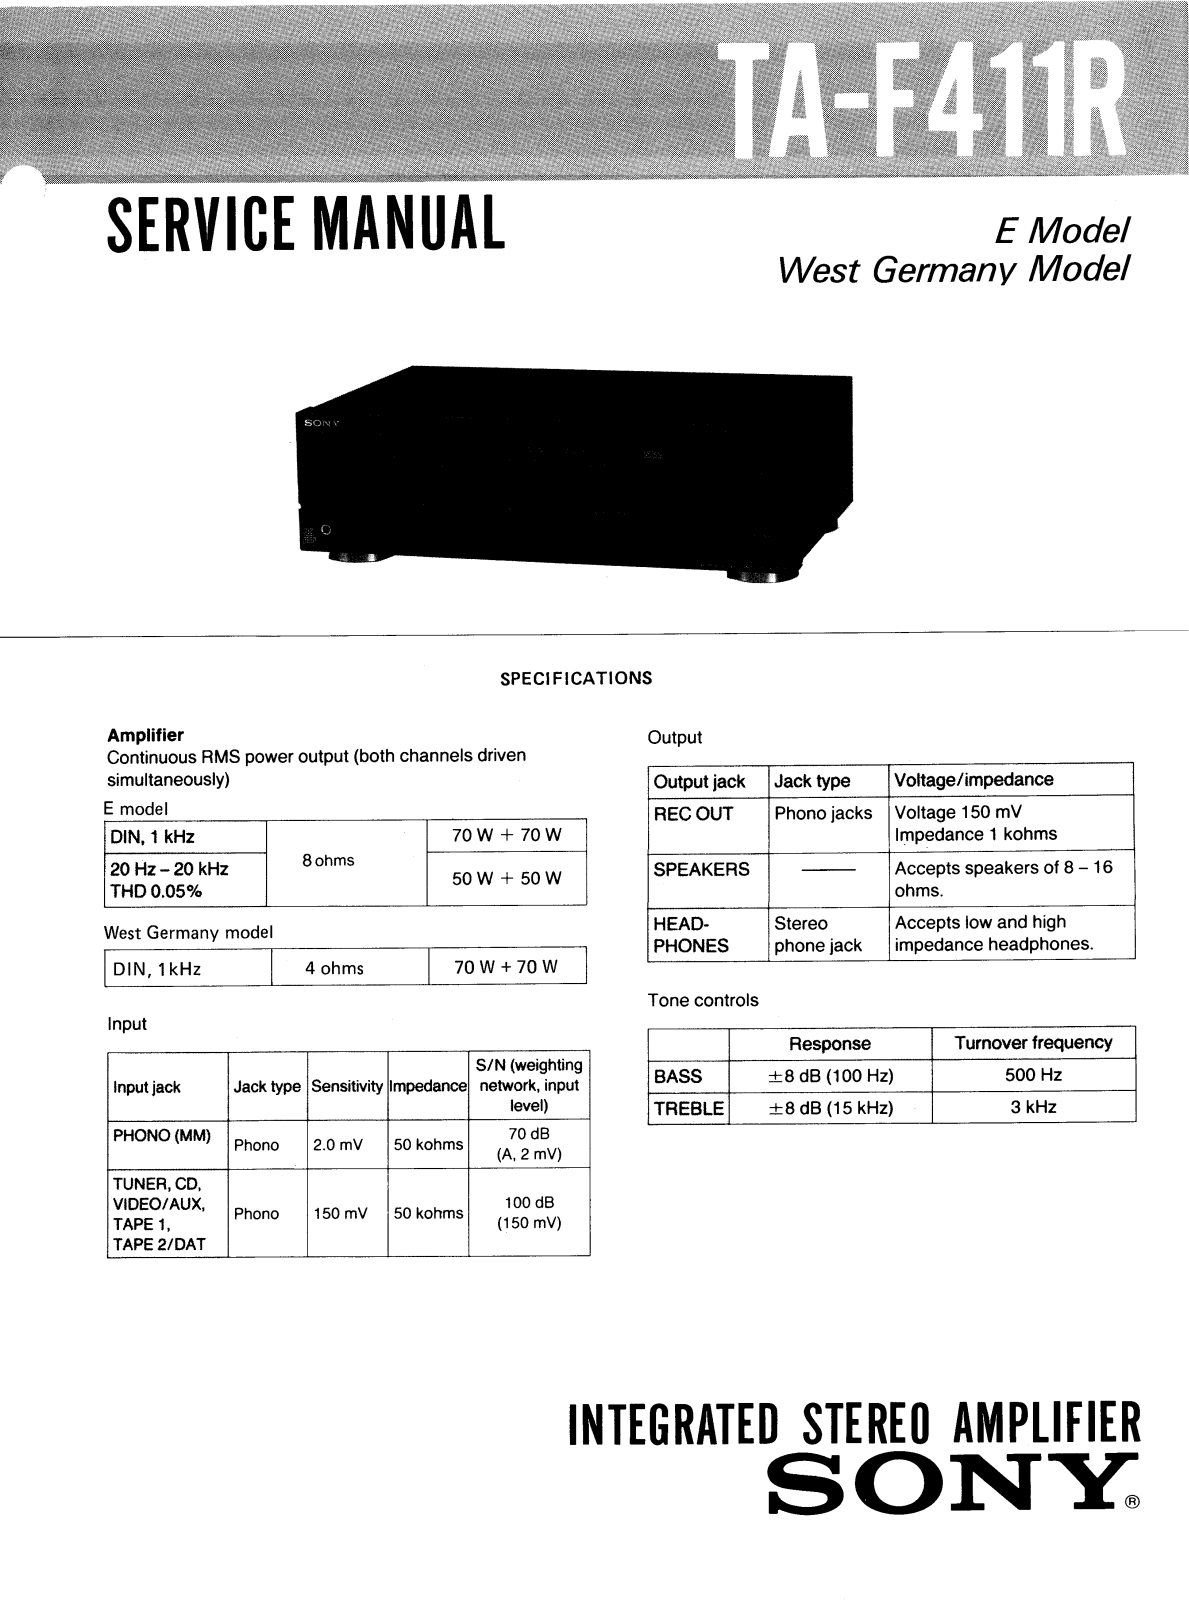 Sony TAF-411-R Service manual